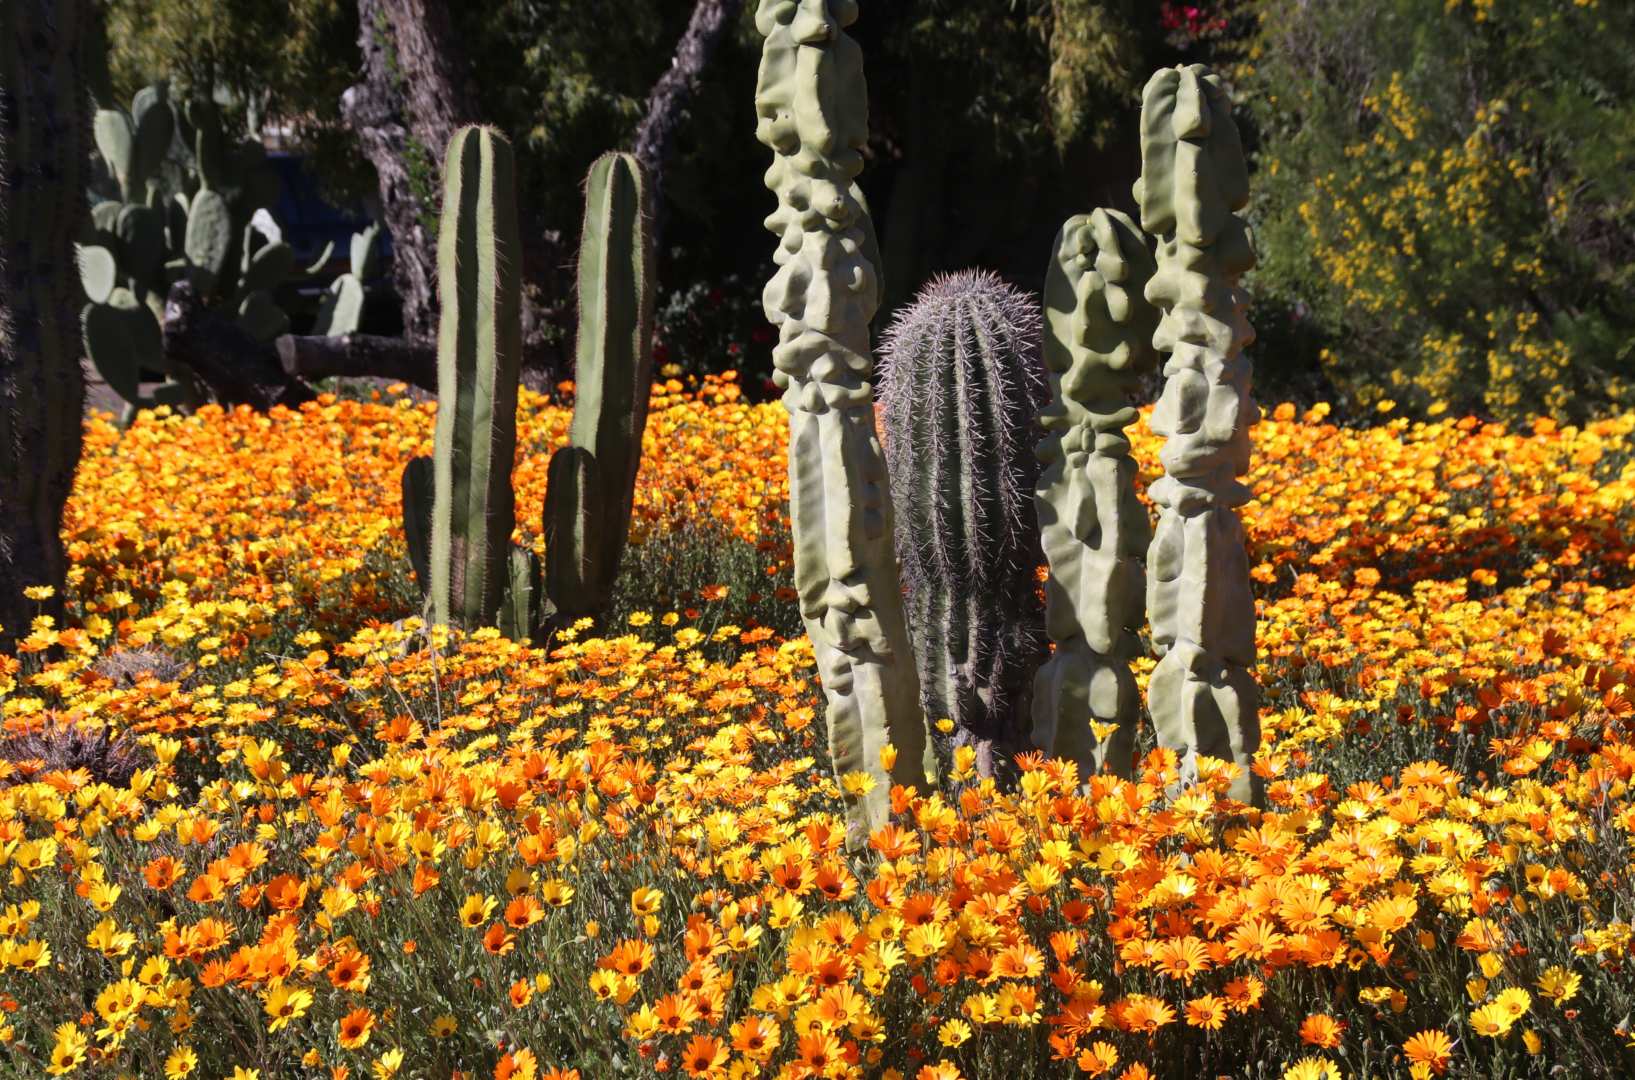 cactus in a sunflower field